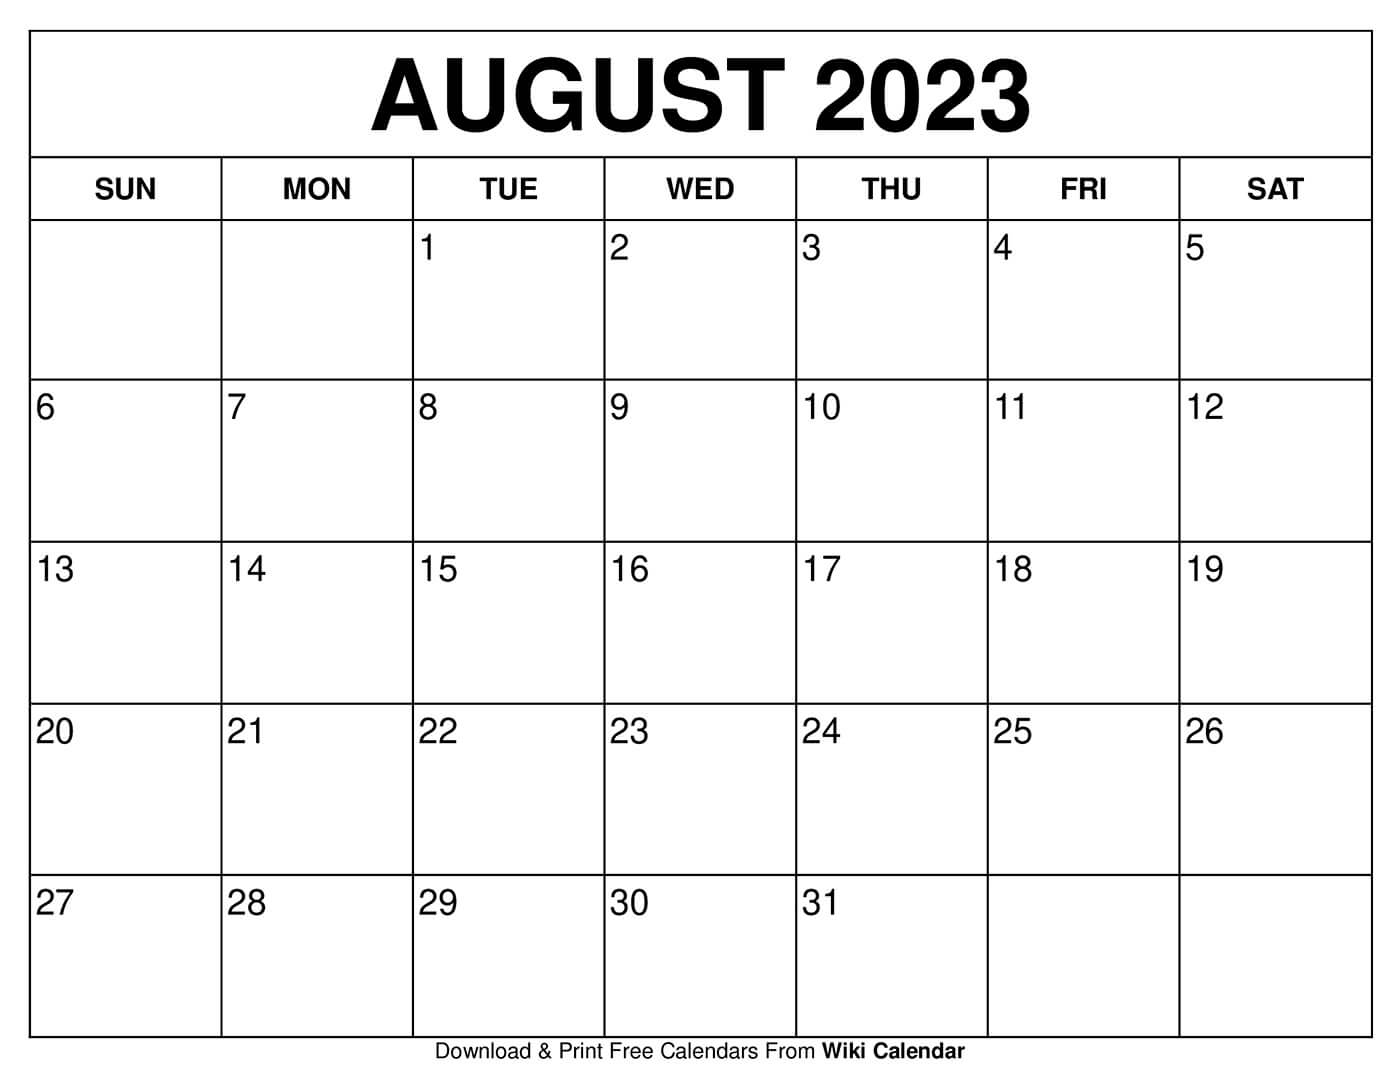 Wiki Calendar February 2022 With Holidays.Free Printable August 2022 Calendars Wiki Calendar